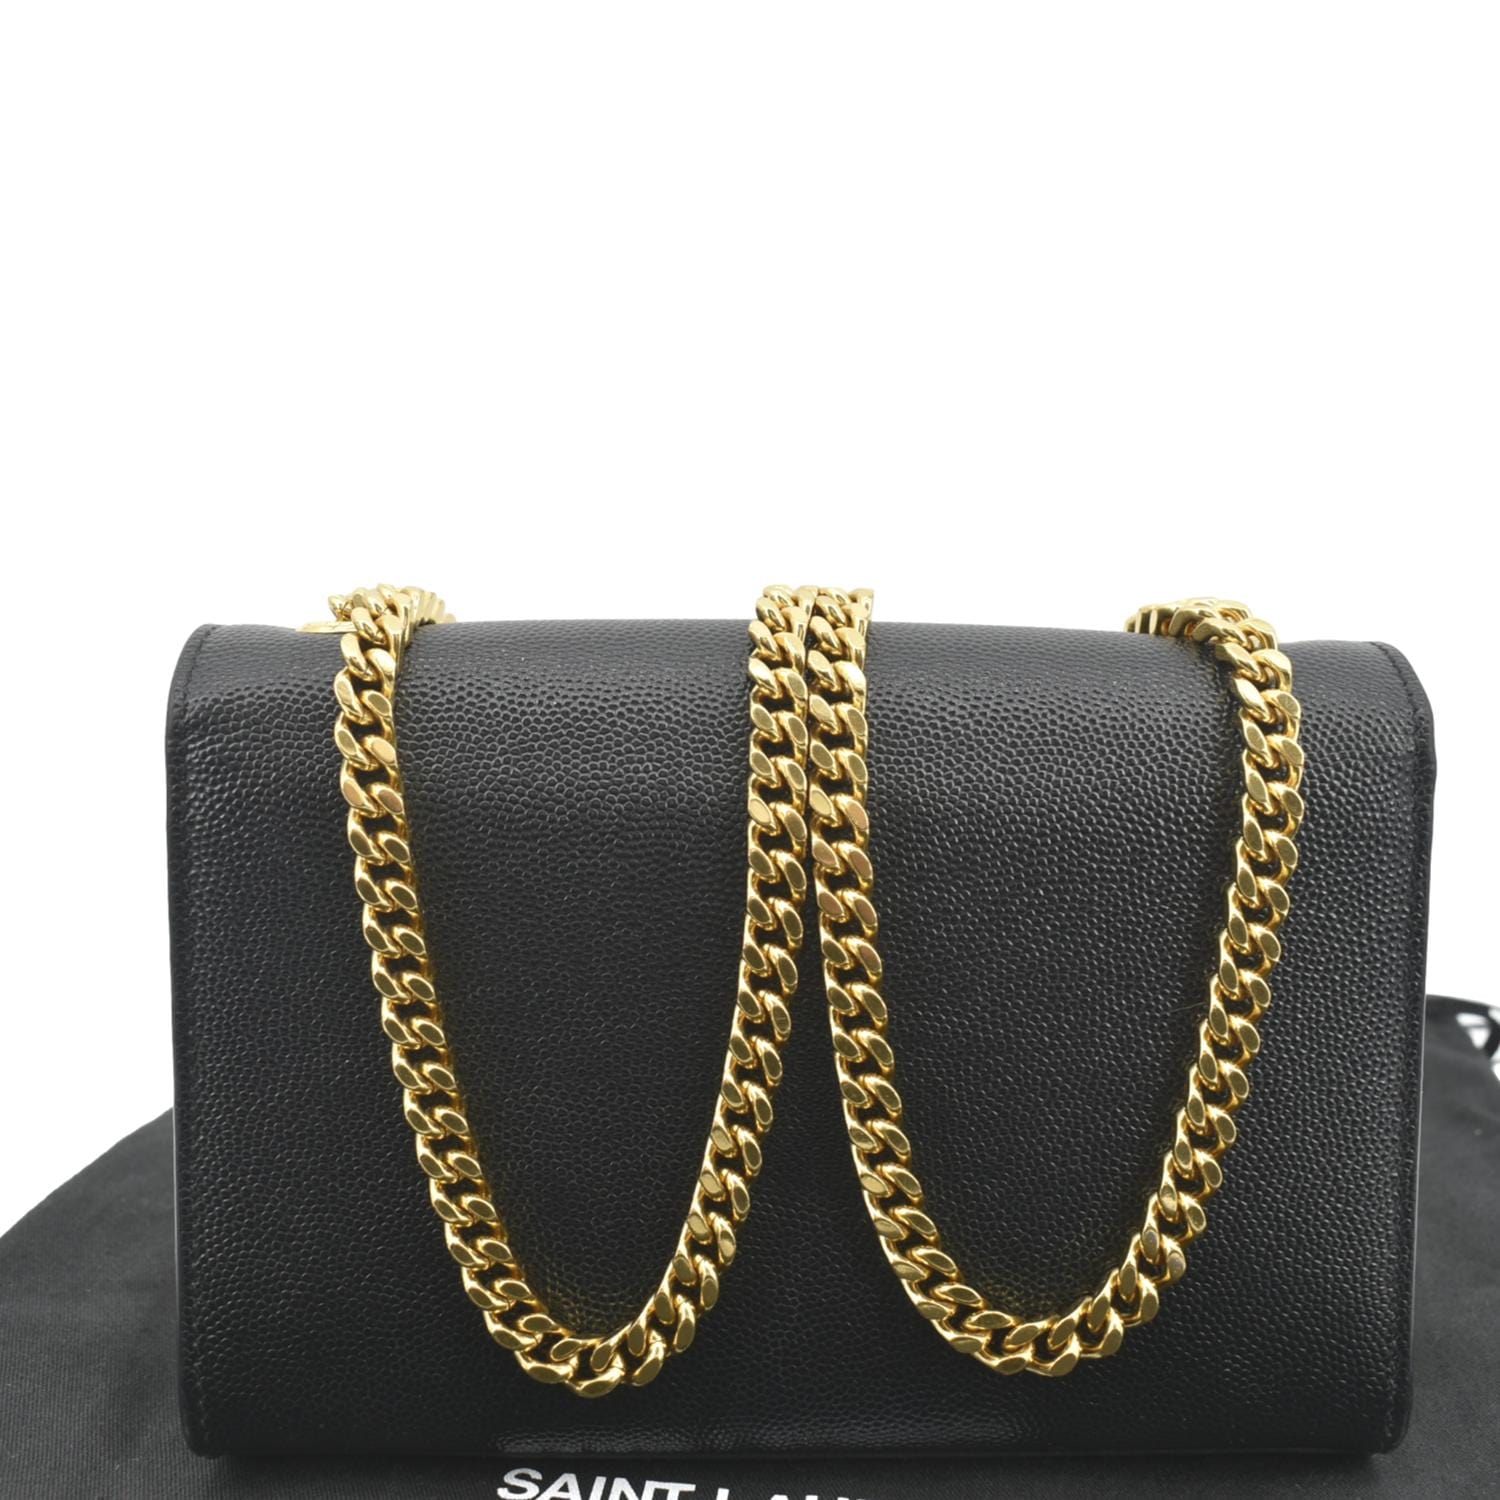 Yves Saint Laurent YSL Kate Medium Black Tassel Bag in Dust Bag at